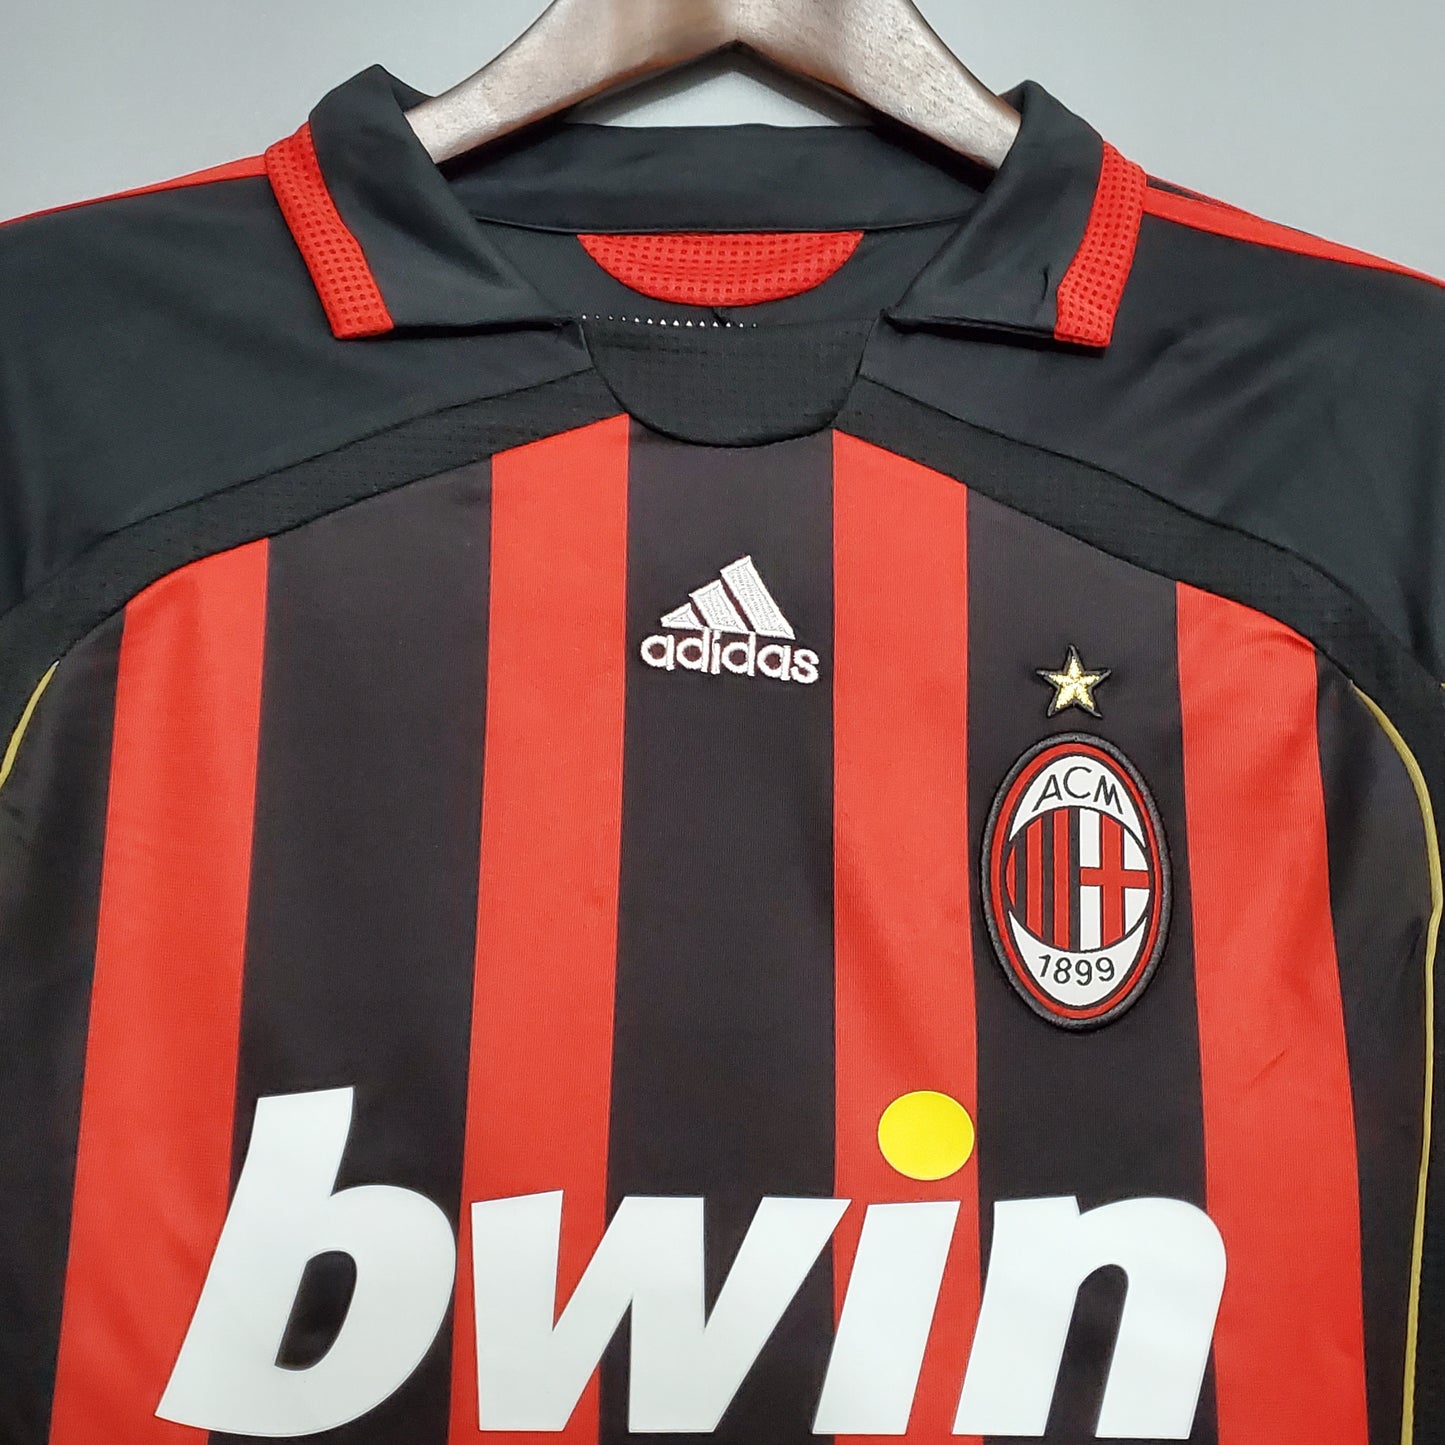 AC Milan 2006/07 Long Sleeve Home Jersey